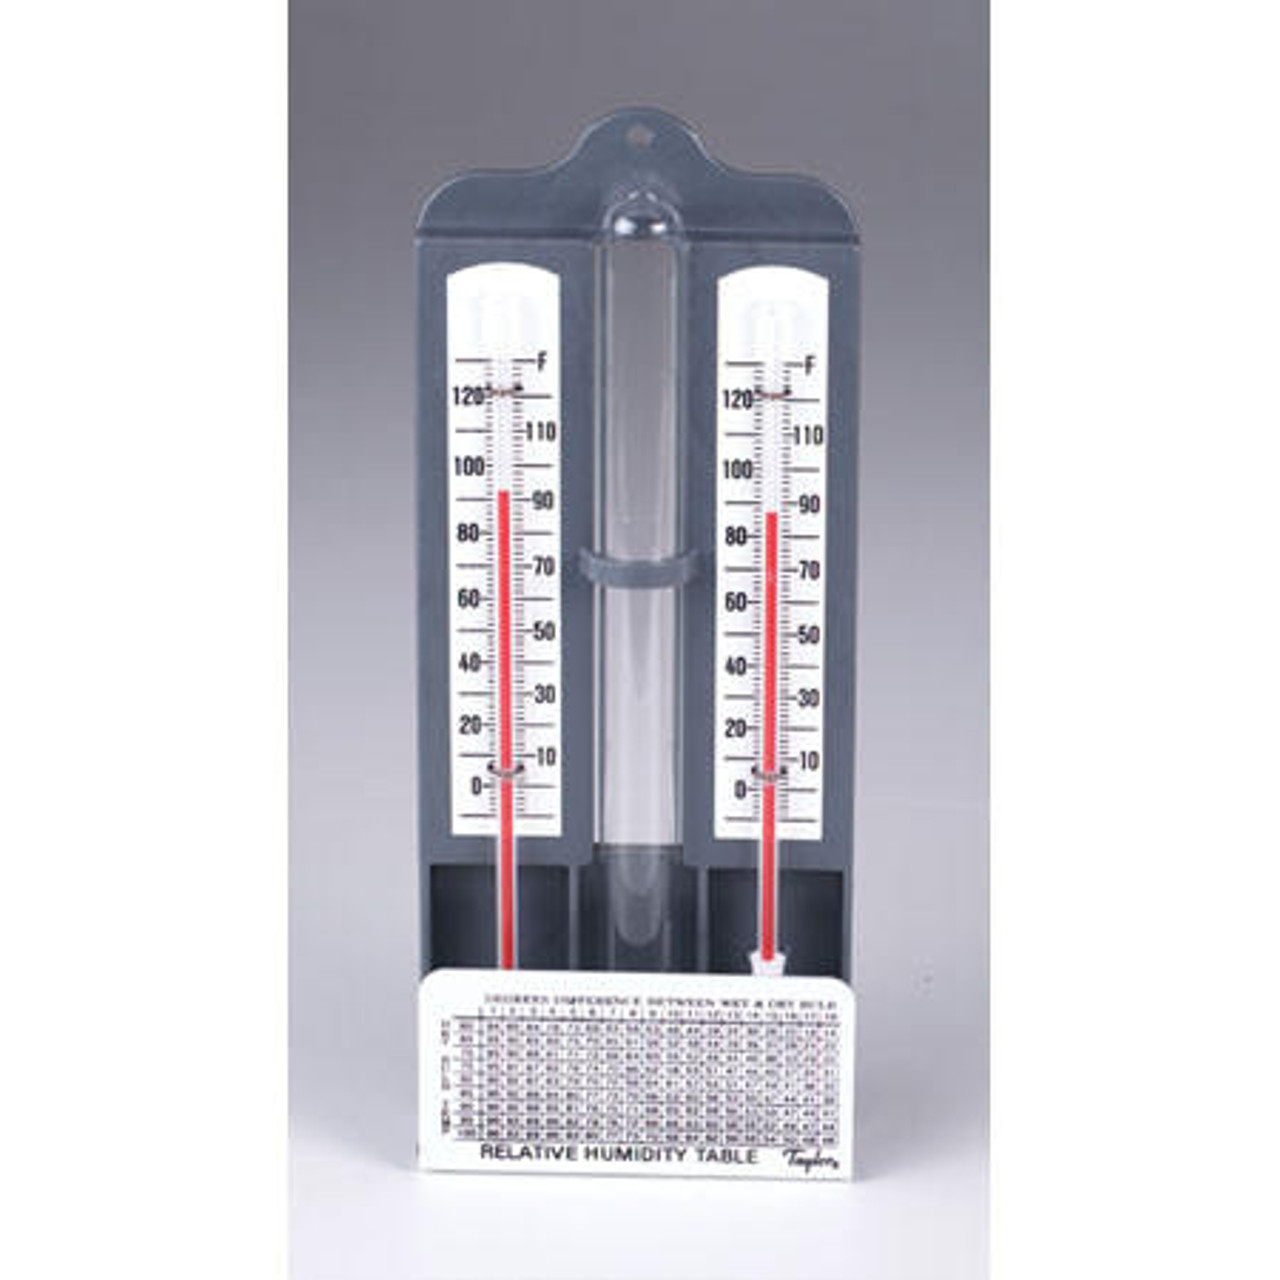 Mason's Hygrometer - Stock Image - C027/9757 - Science Photo Library